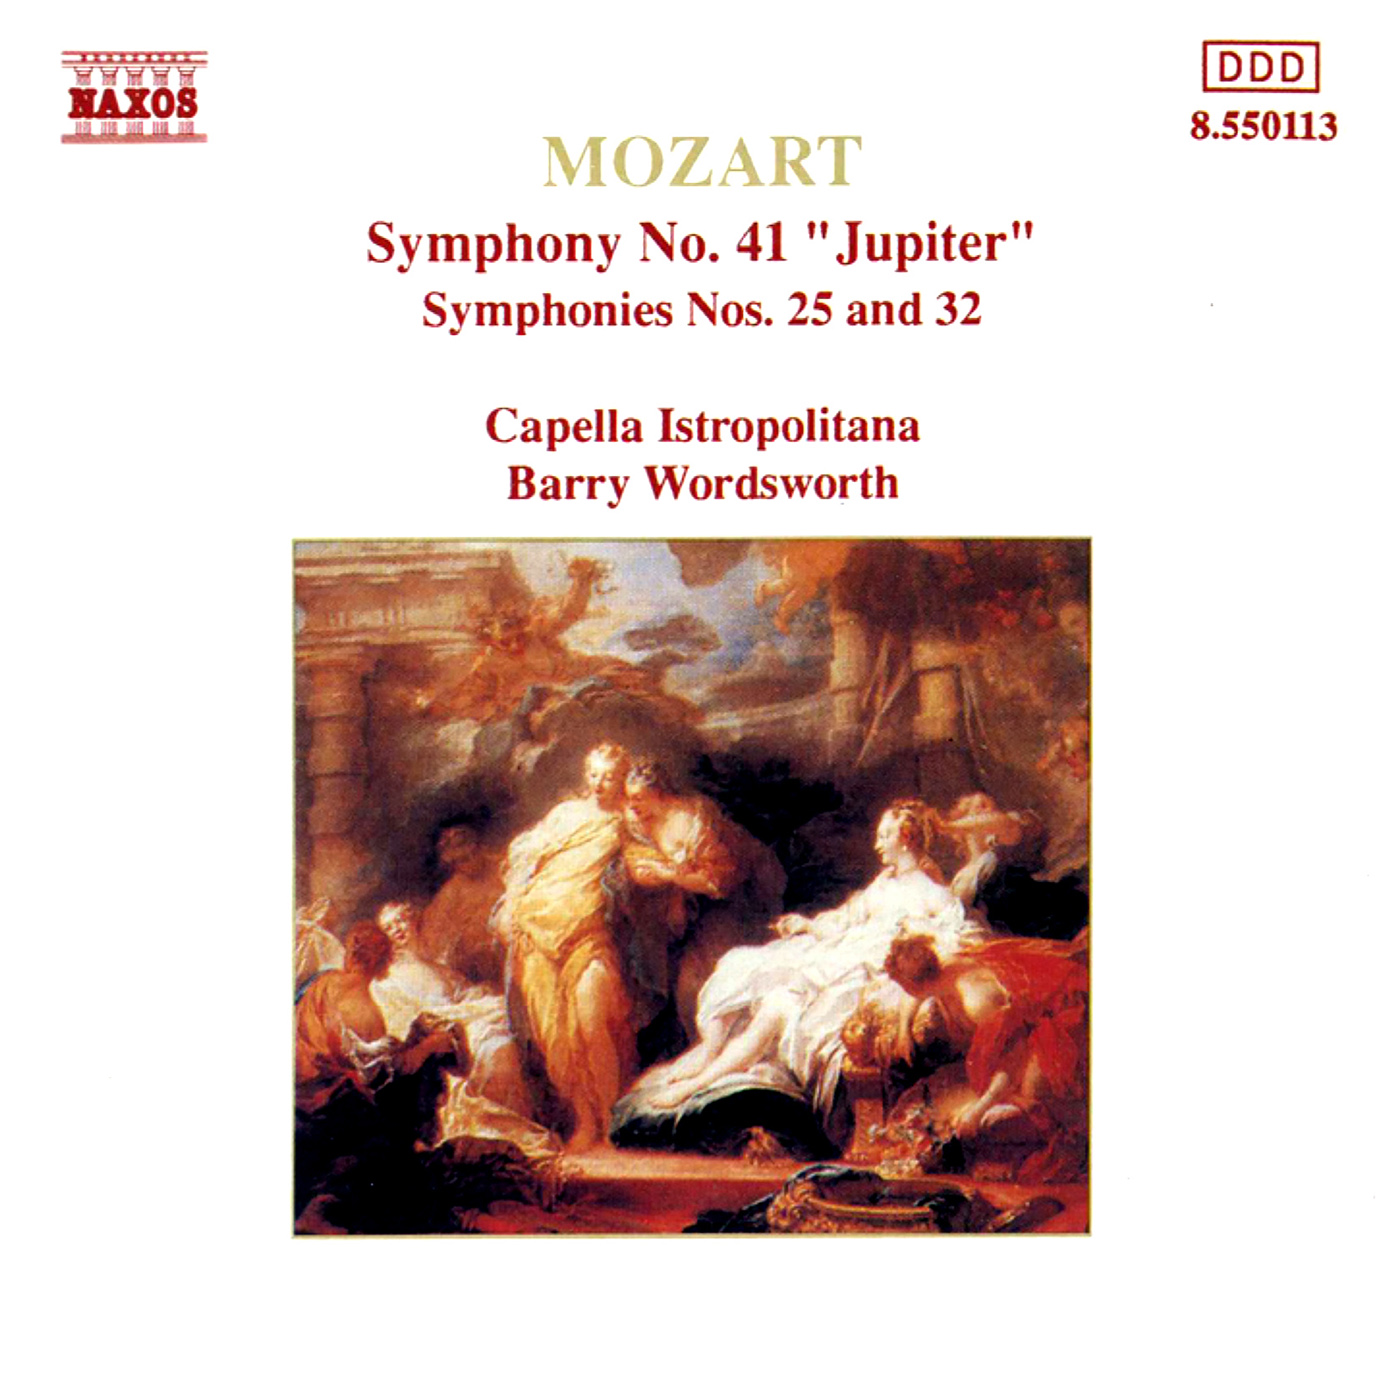 MOZART: Symphonies Nos. 25, 32 and 41